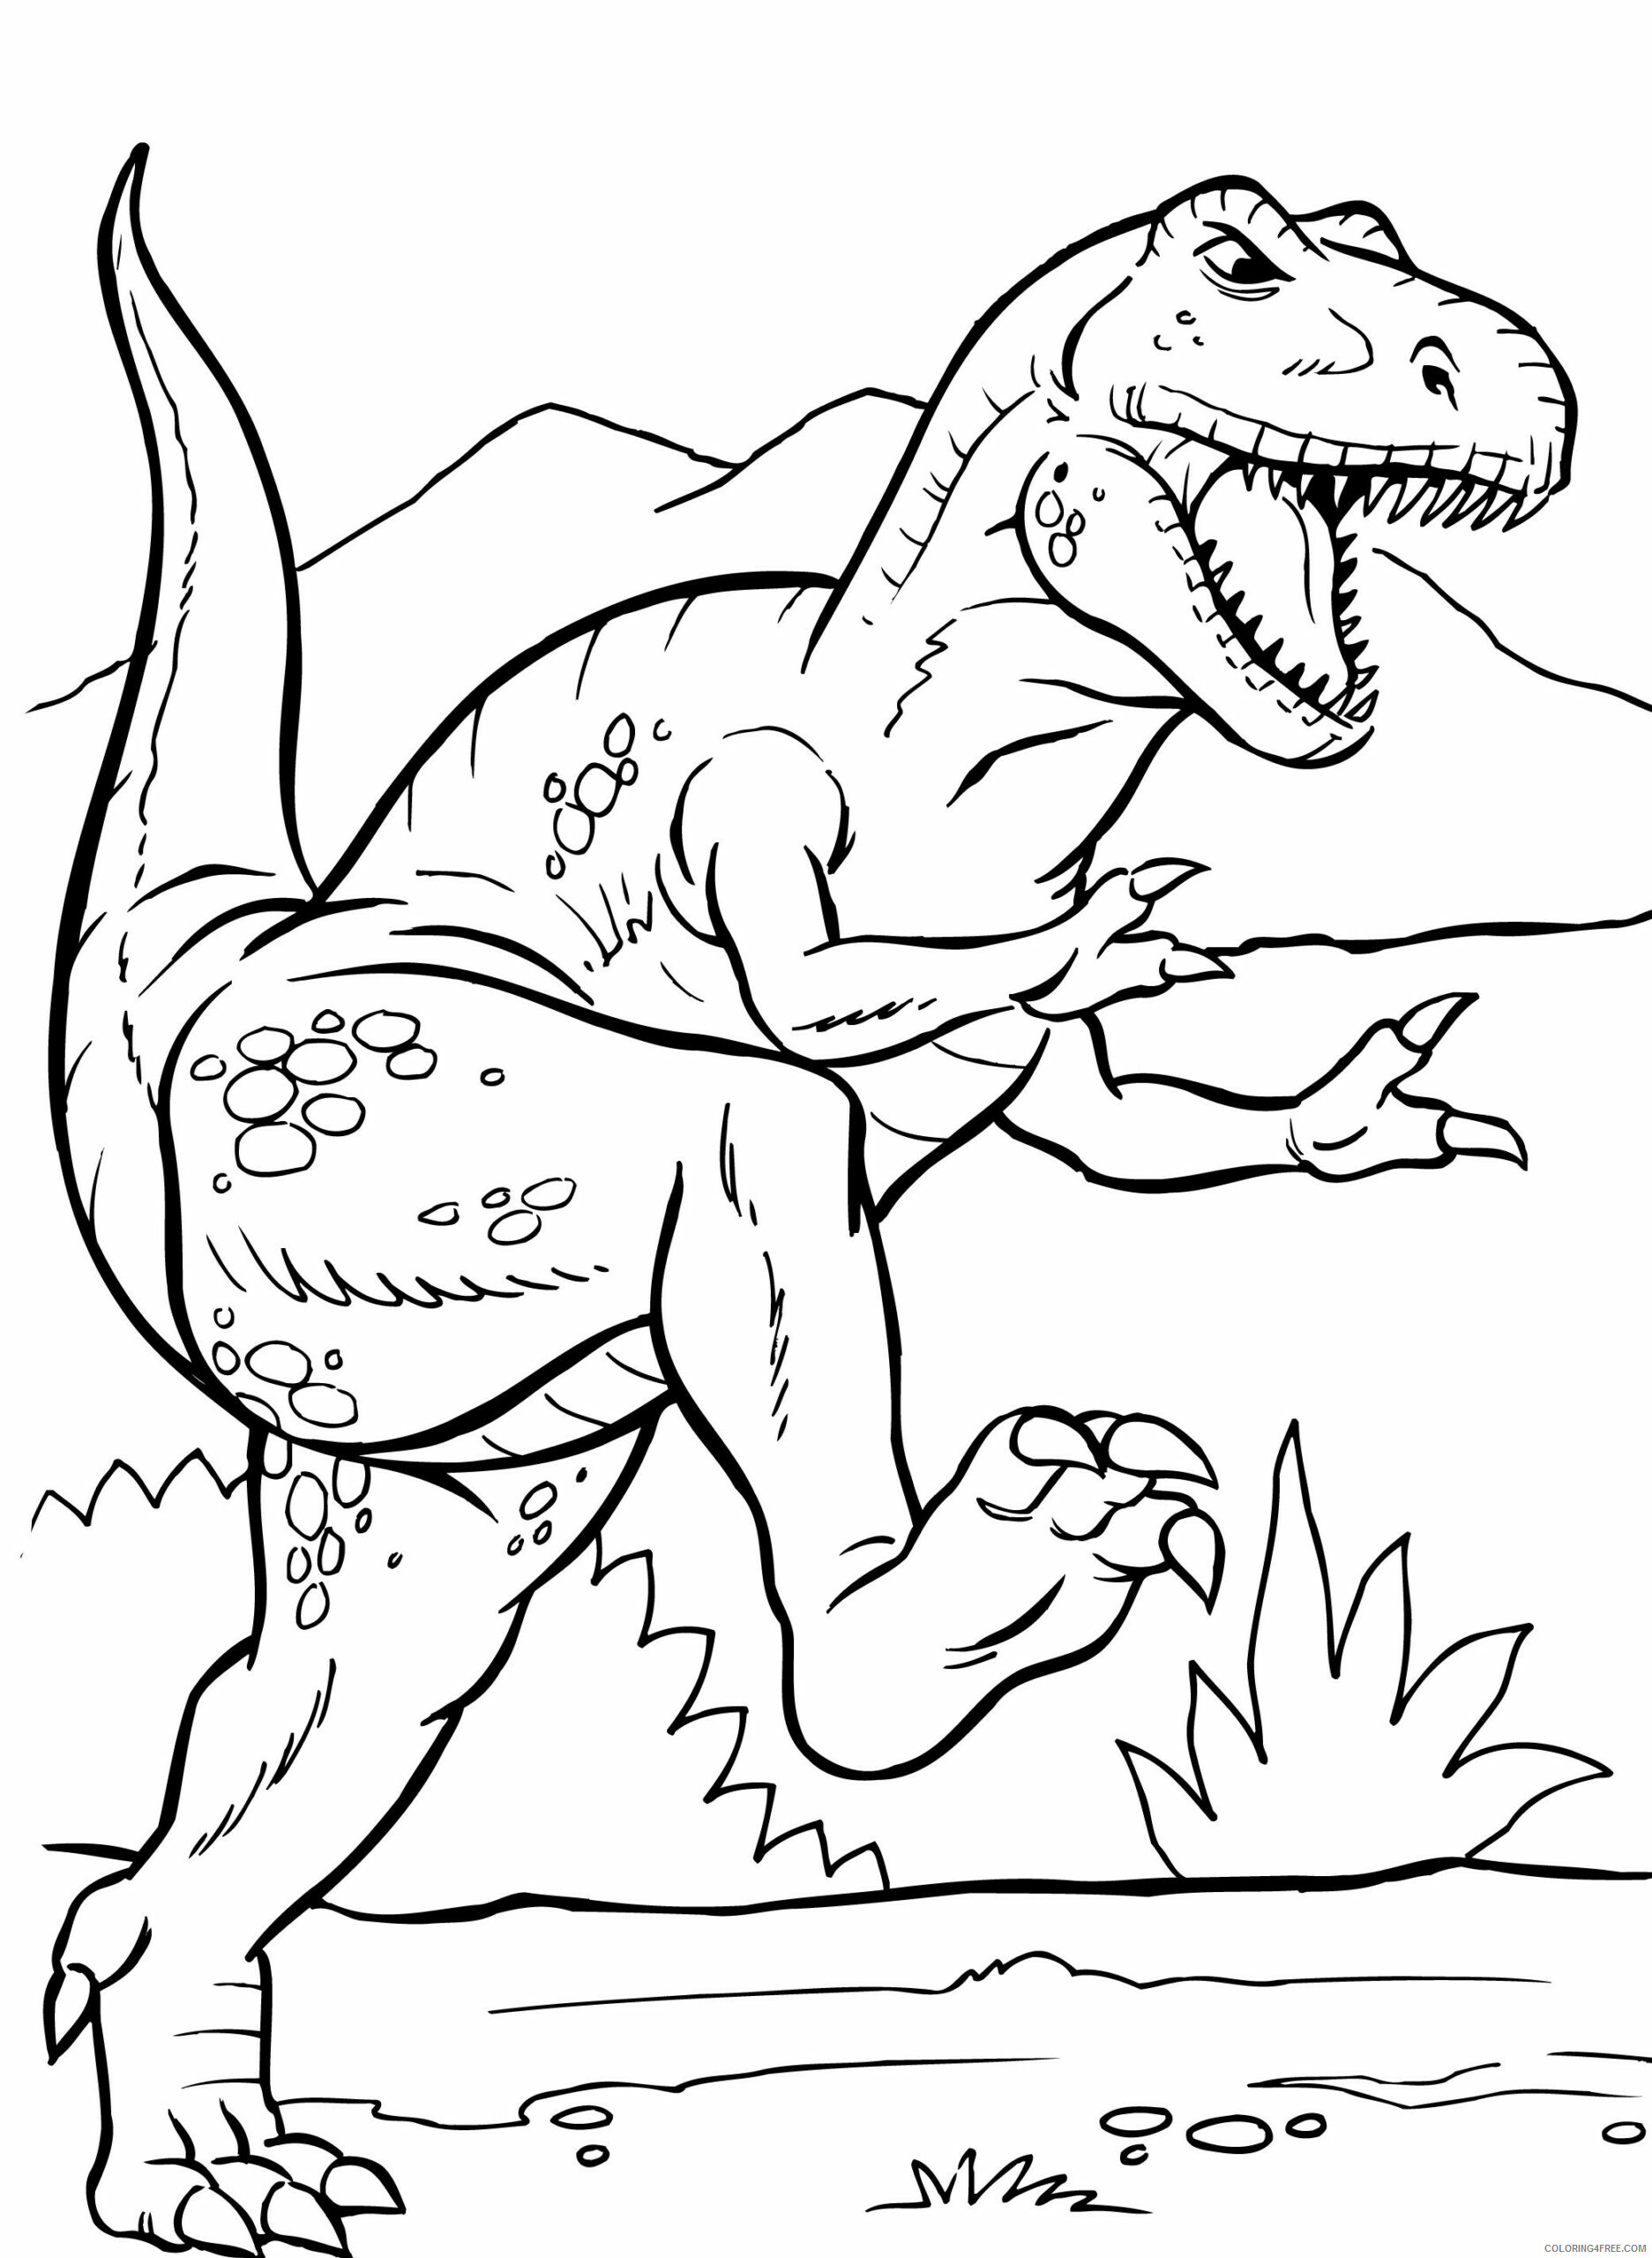 Tyrannosaurus Rex Coloring Pages Animal Printable Sheets T Rex 2021 4915 Coloring4free